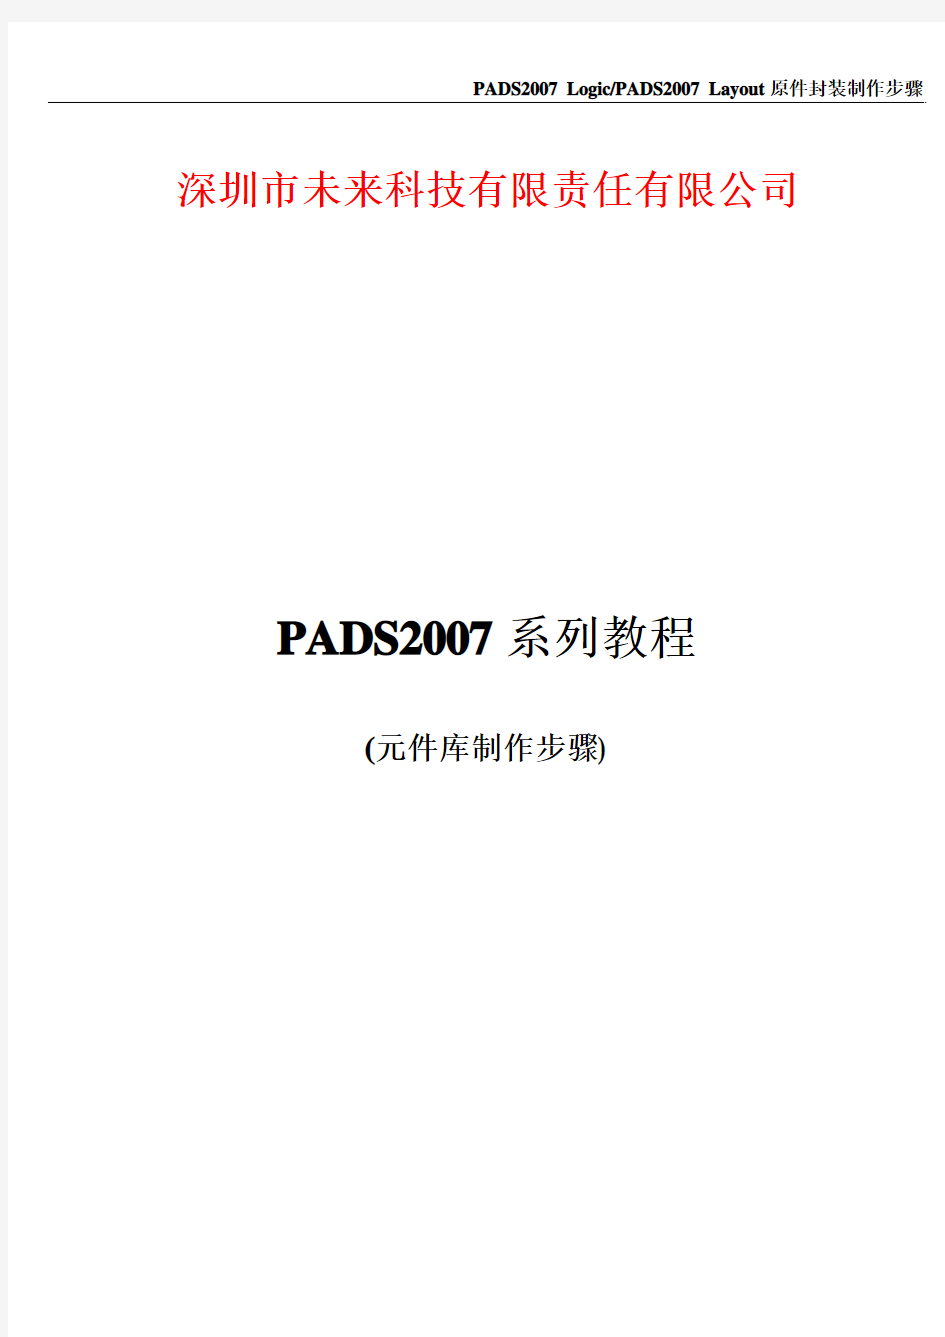 Pads2007原件库制作流程